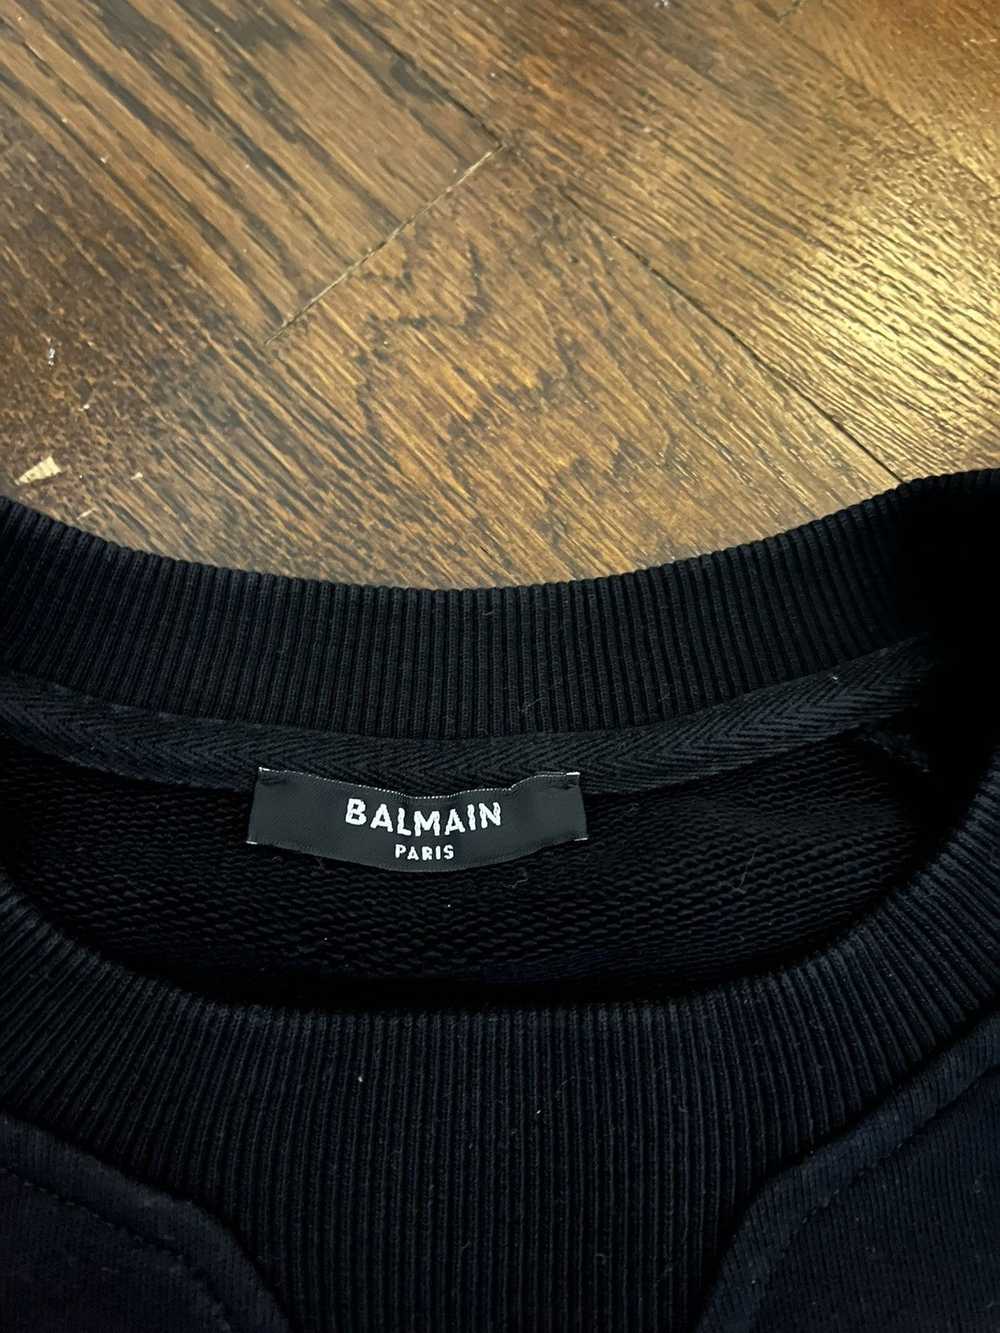 Balmain Balmain Logo Print Cotton Jersey Sweatshi… - image 3